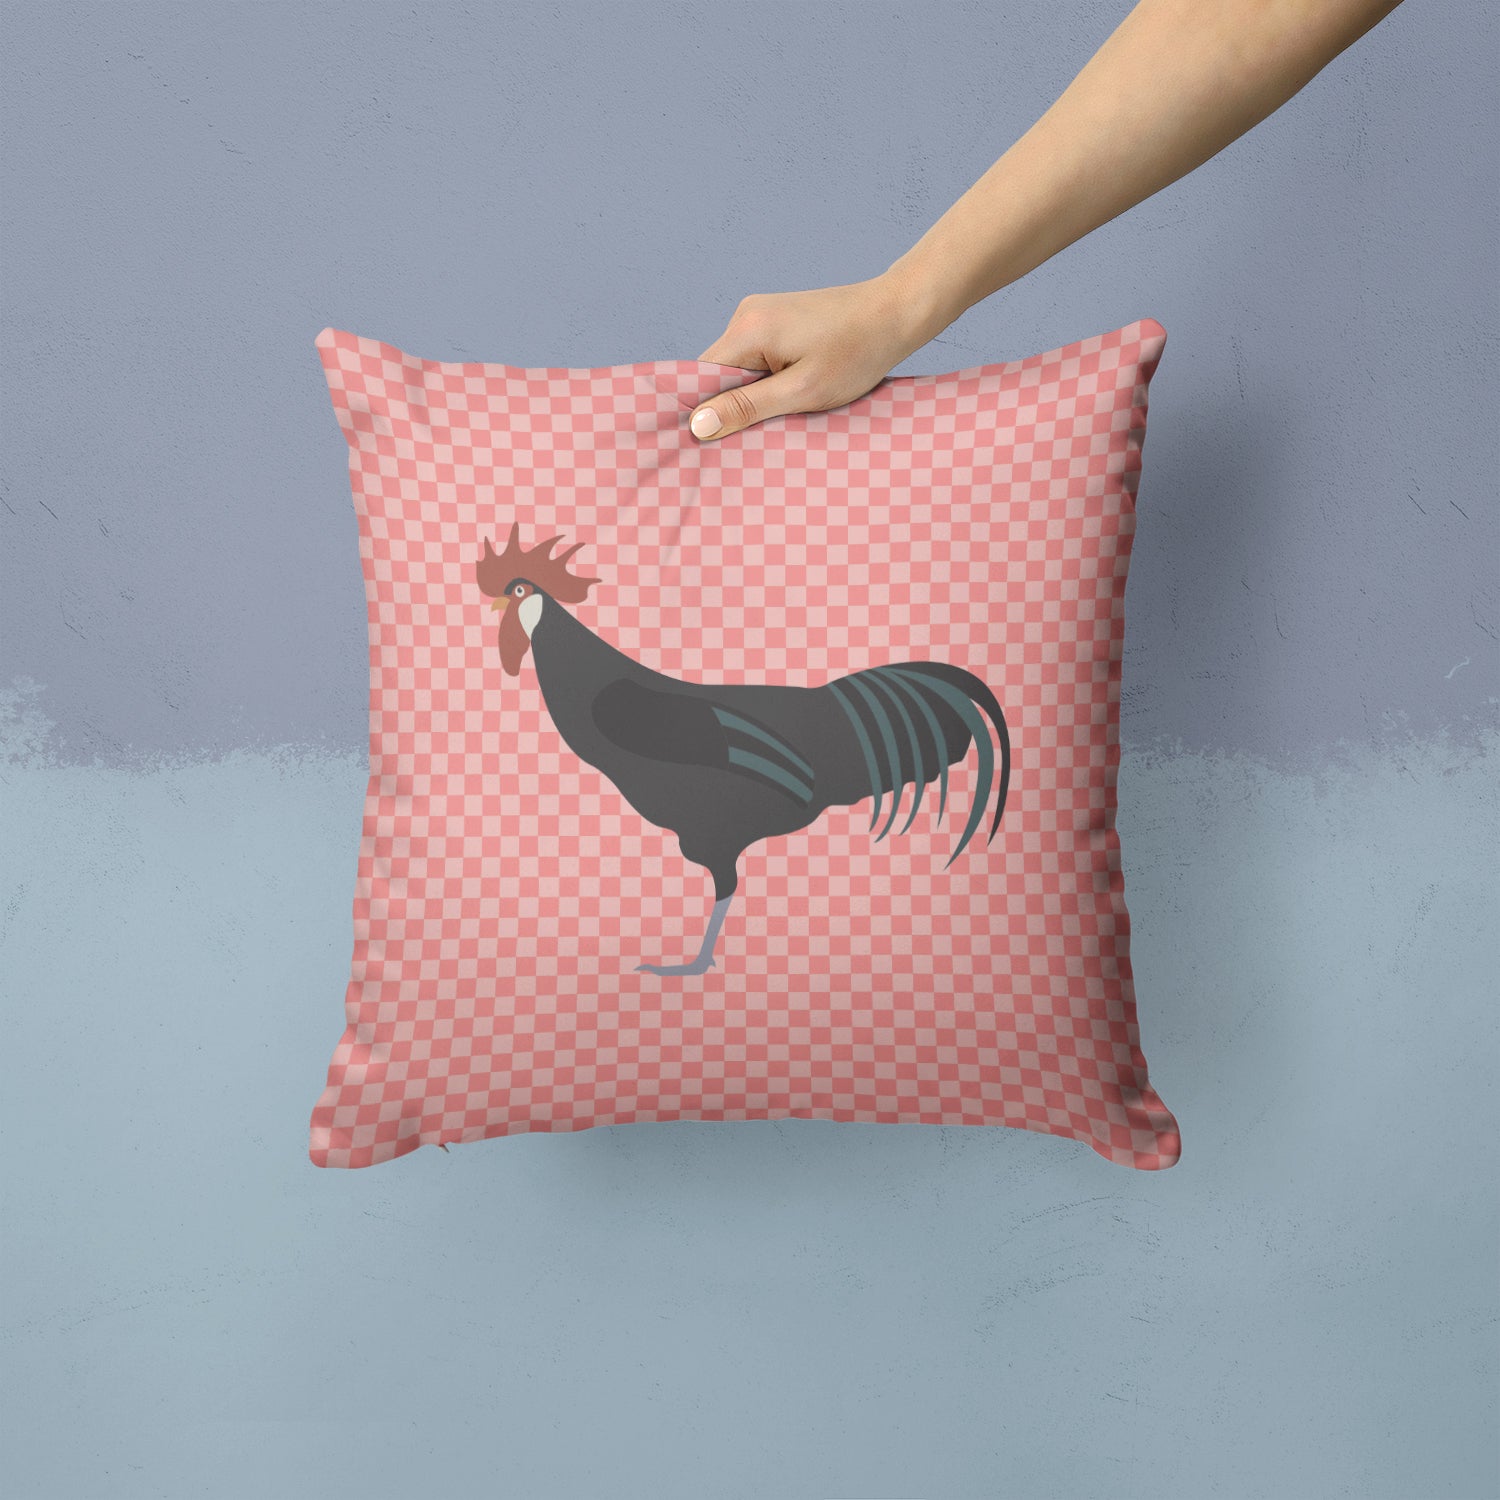 Minorca Ctalalan Chicken Pink Check Fabric Decorative Pillow BB7841PW1414 - the-store.com